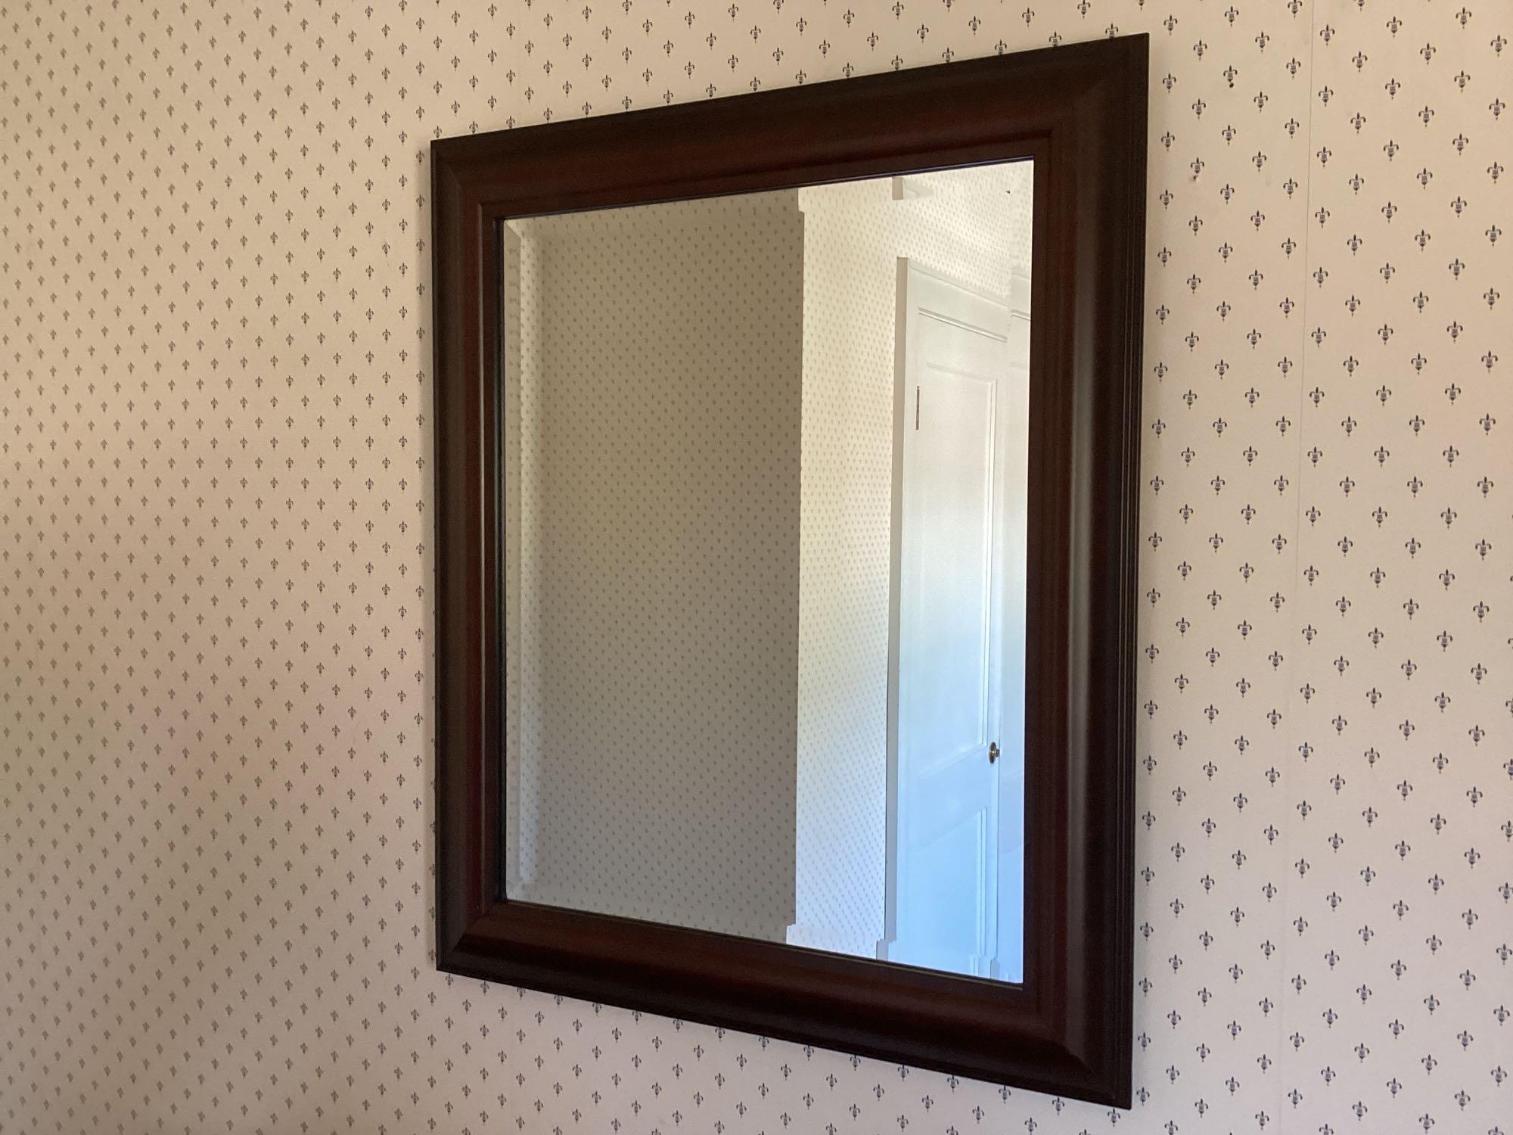 Image for Beveled Mirror in Frame